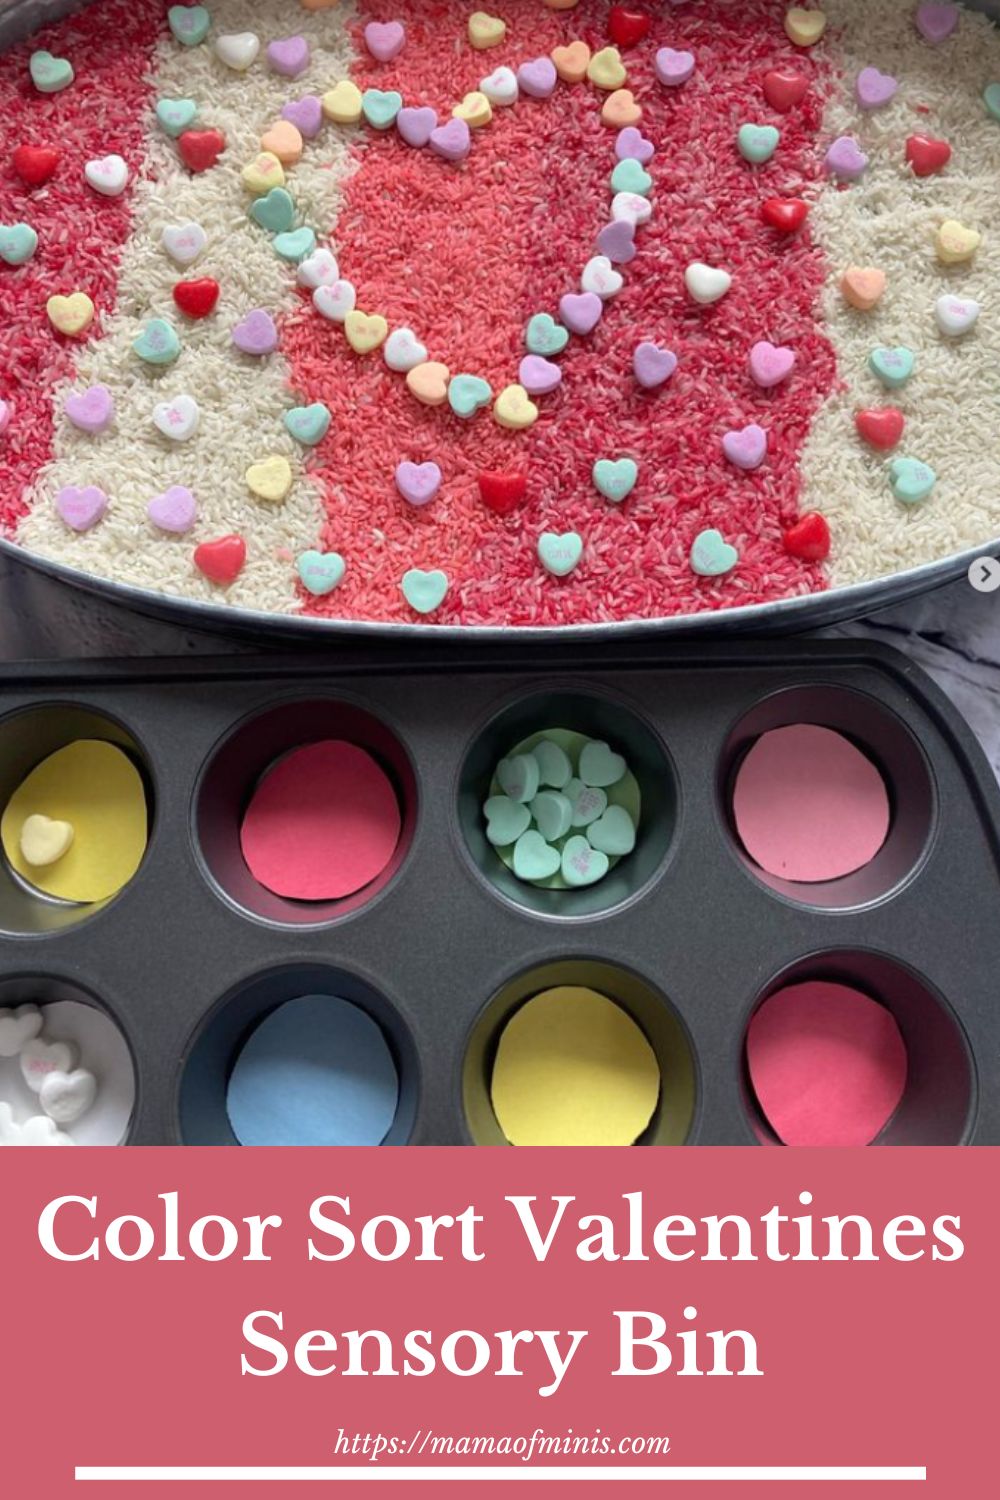 Color Sort Valentines Sensory Bin